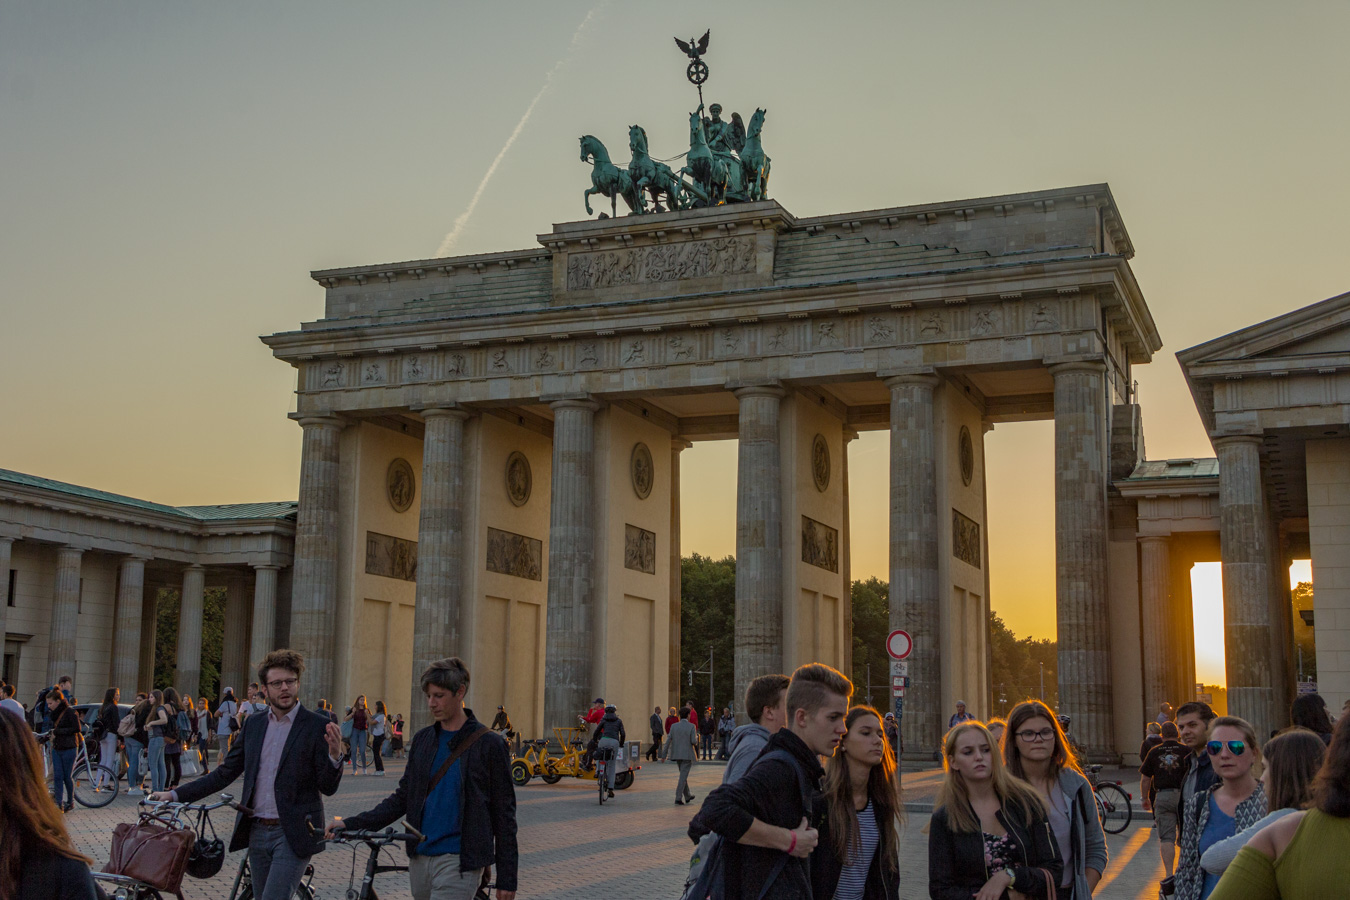 #Europe #Berlin #Germany #Brandenburggate #brandenburgertor #igersgermany #iggermany  #mumbaiigers #mumbaiigerspicks  #travel #travelphotography #traveler #travelbug #travelpic #travelgram #travelmore #traveldiary #YourShotPhotographer #psffeed #sunset #sonnenuntergang